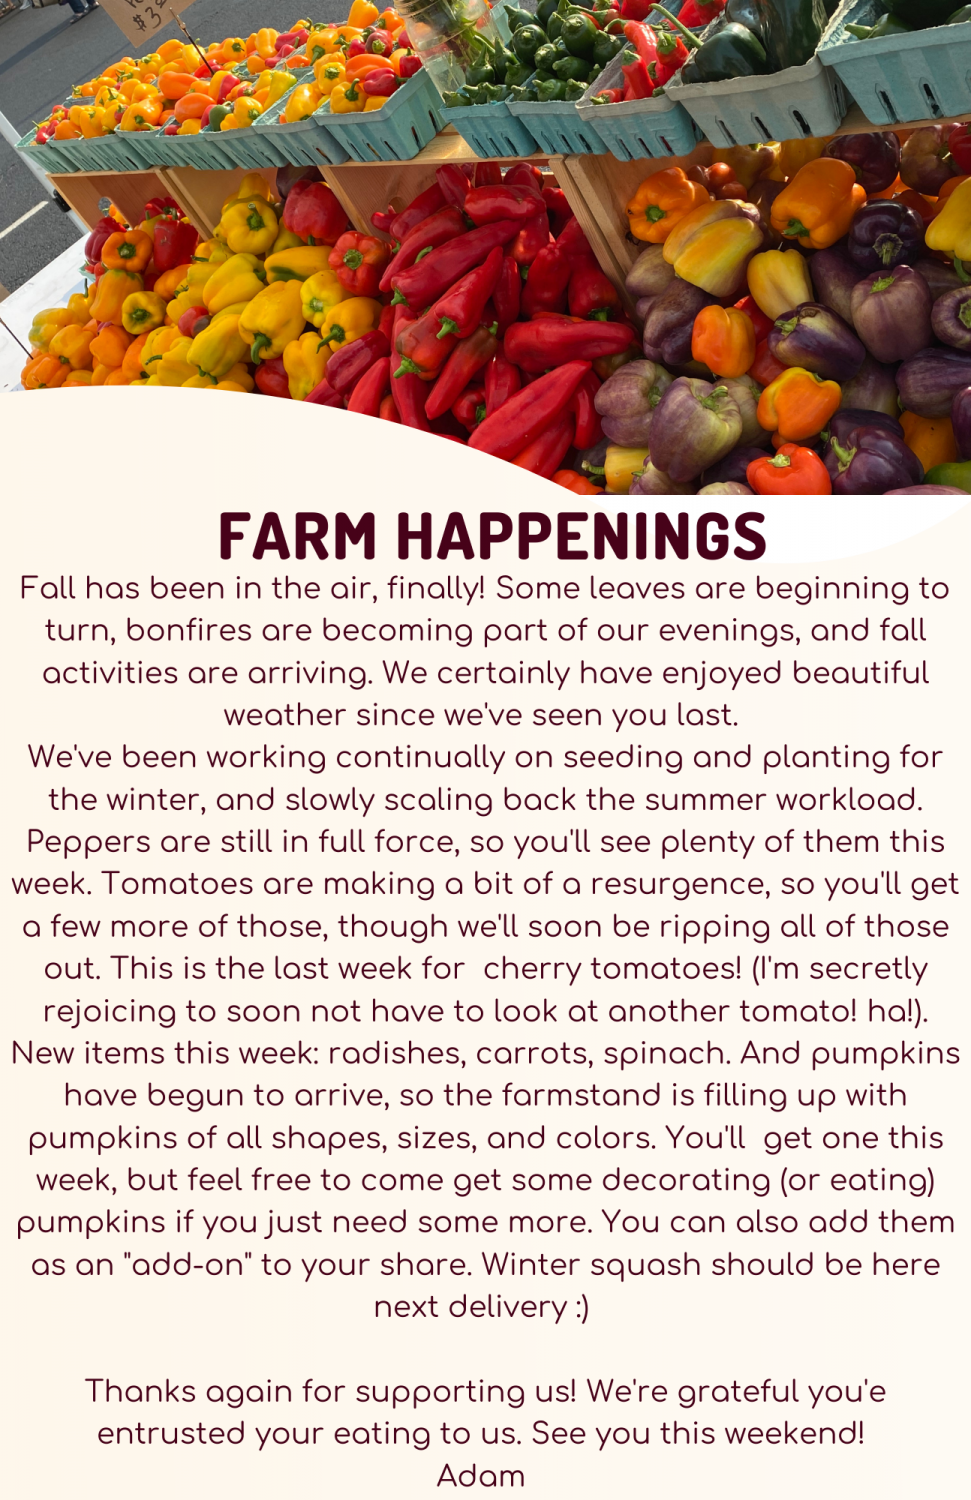 Farm Happenings for October 1, 2021